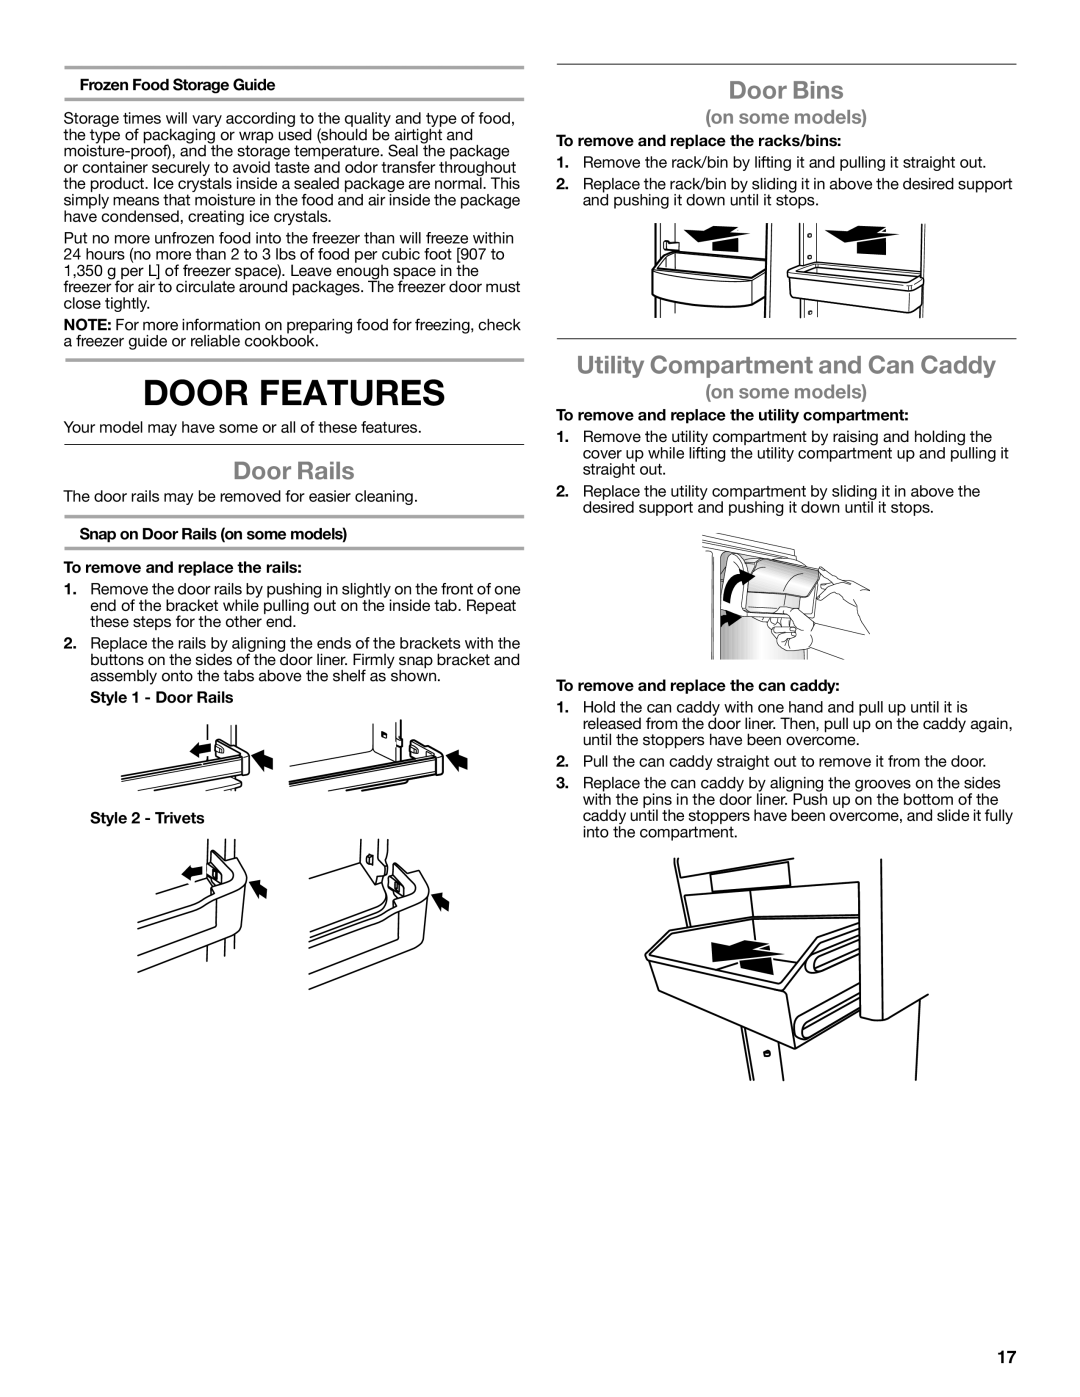 Whirlpool W10551728A installation instructions Door Features, Door Rails, Door Bins, Utility Compartment and Can Caddy 